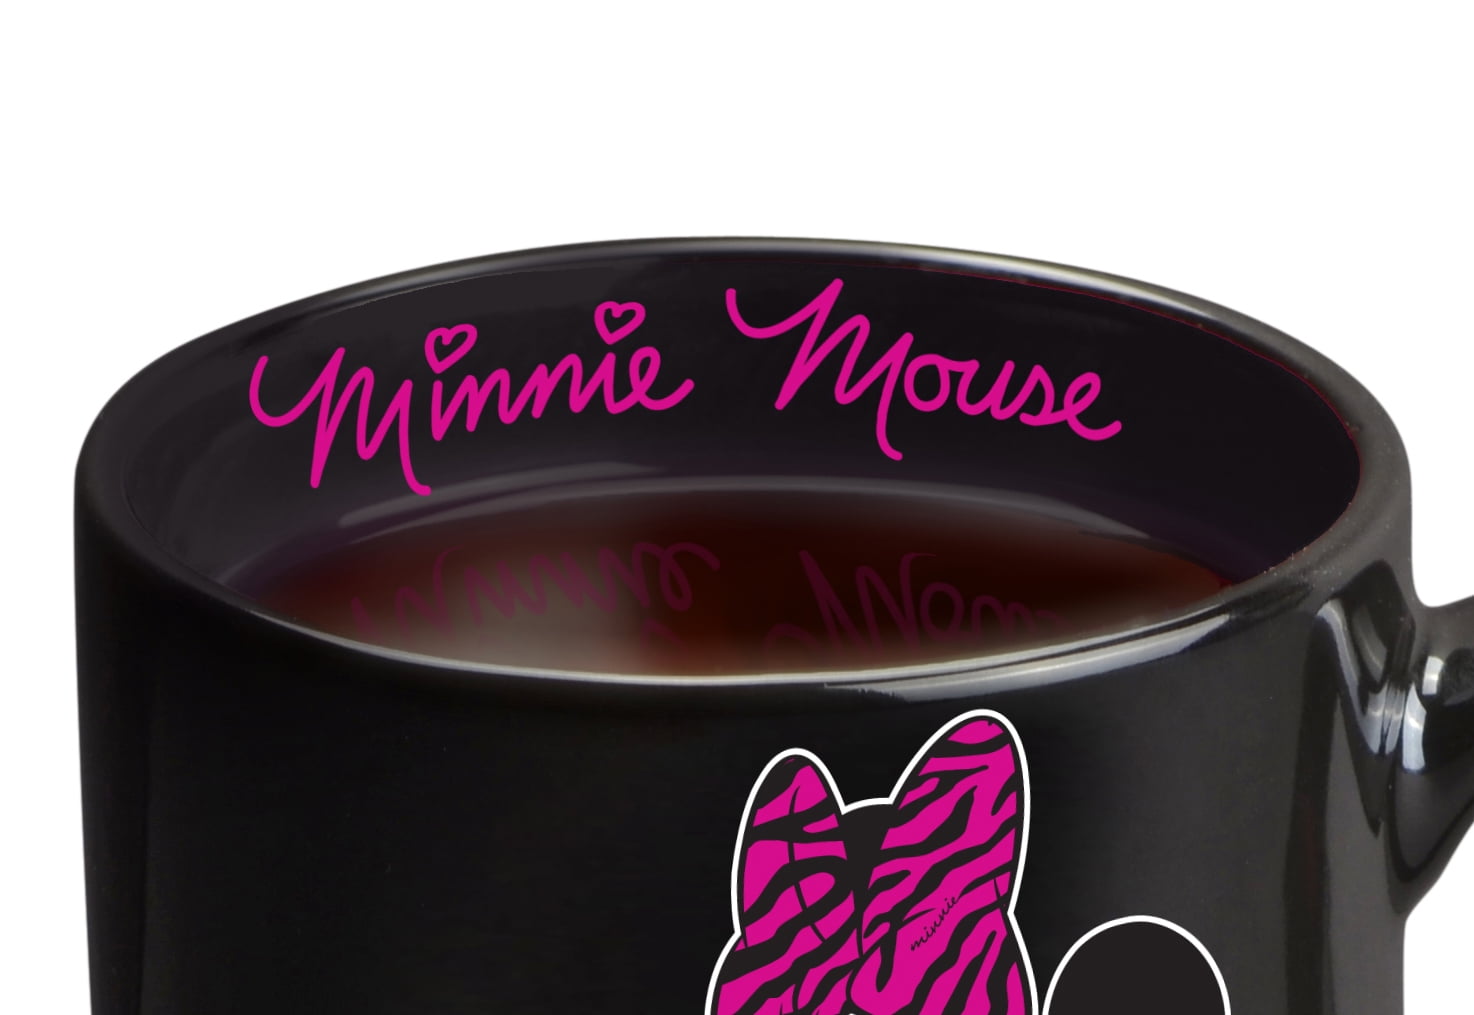 Coffeemaker w/ Mickey & Minnie Mug Warmers 